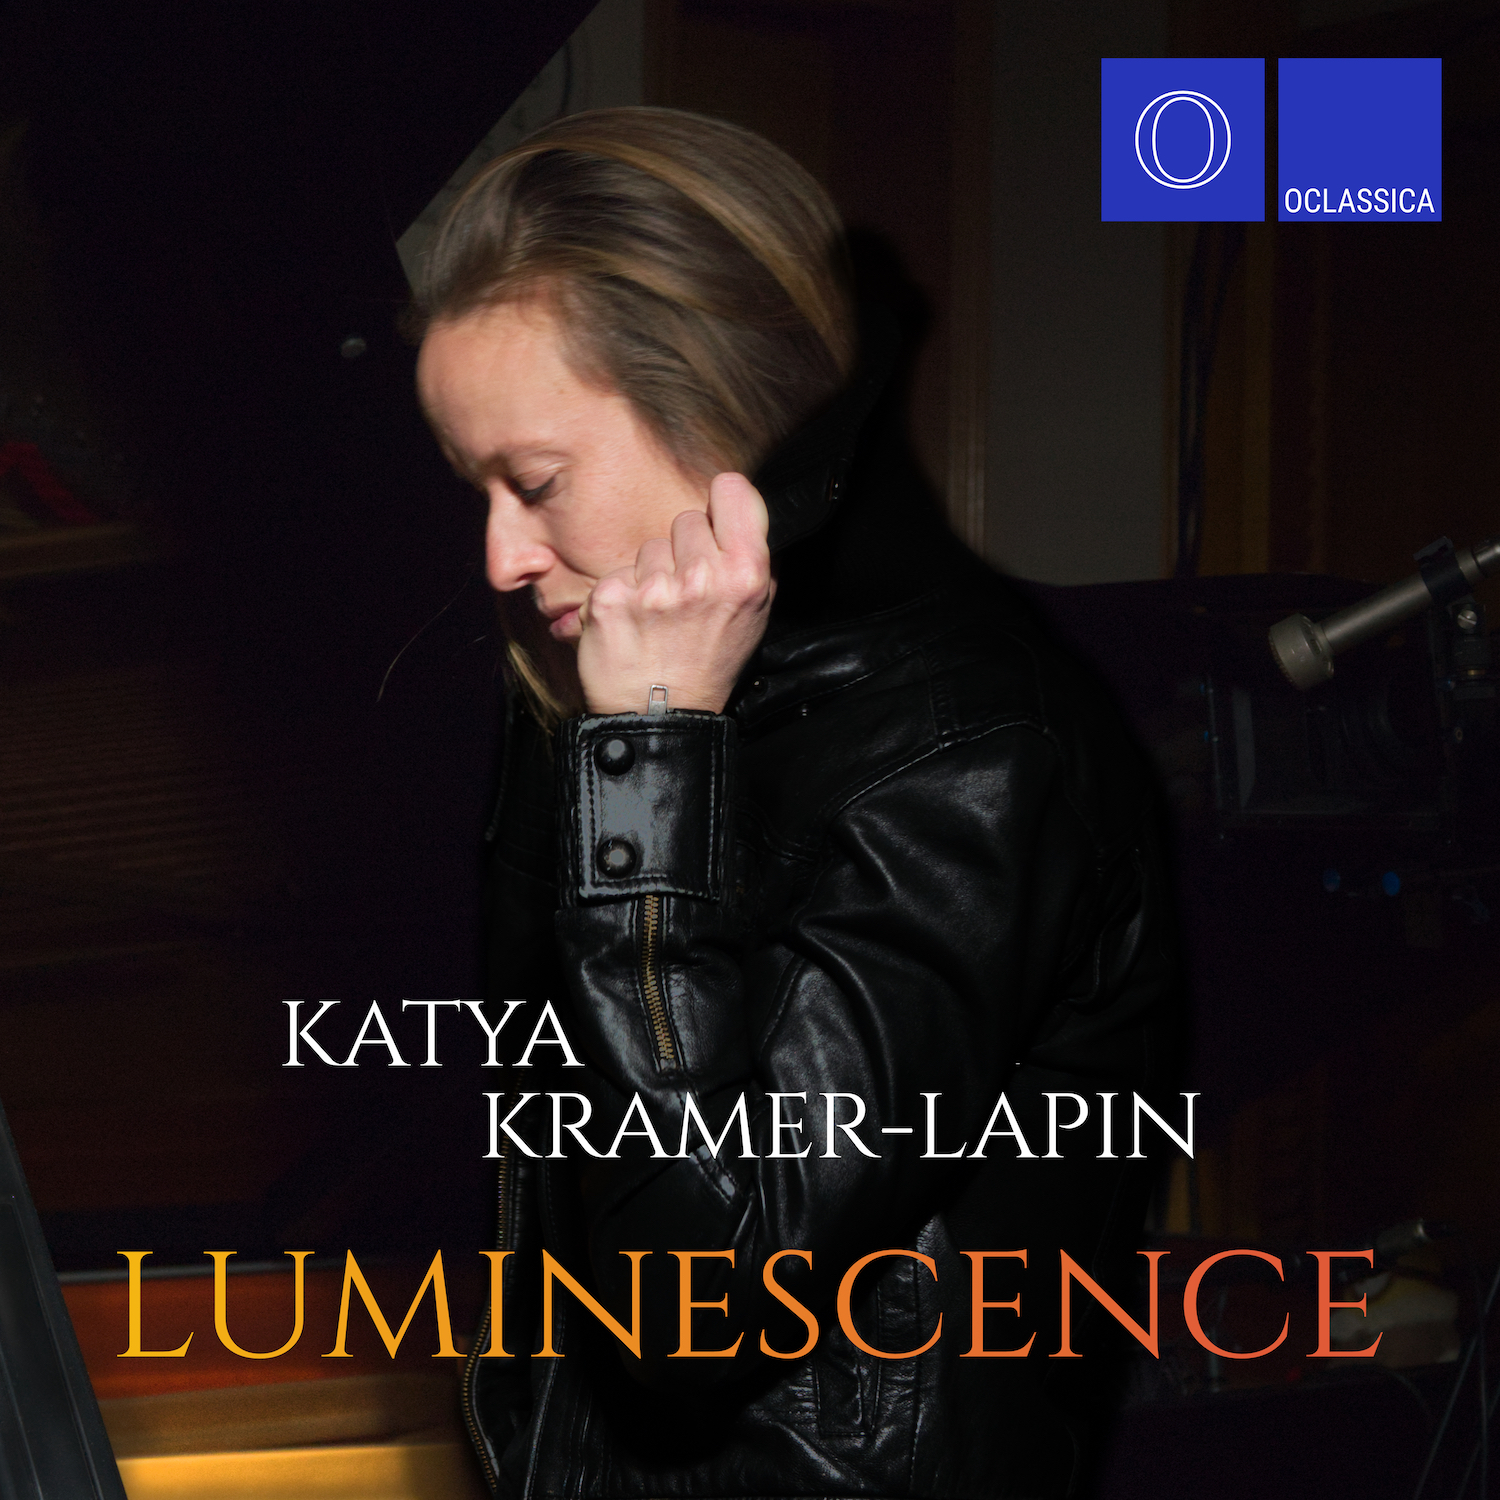 Luminescence by Katya Kramer-Lapin